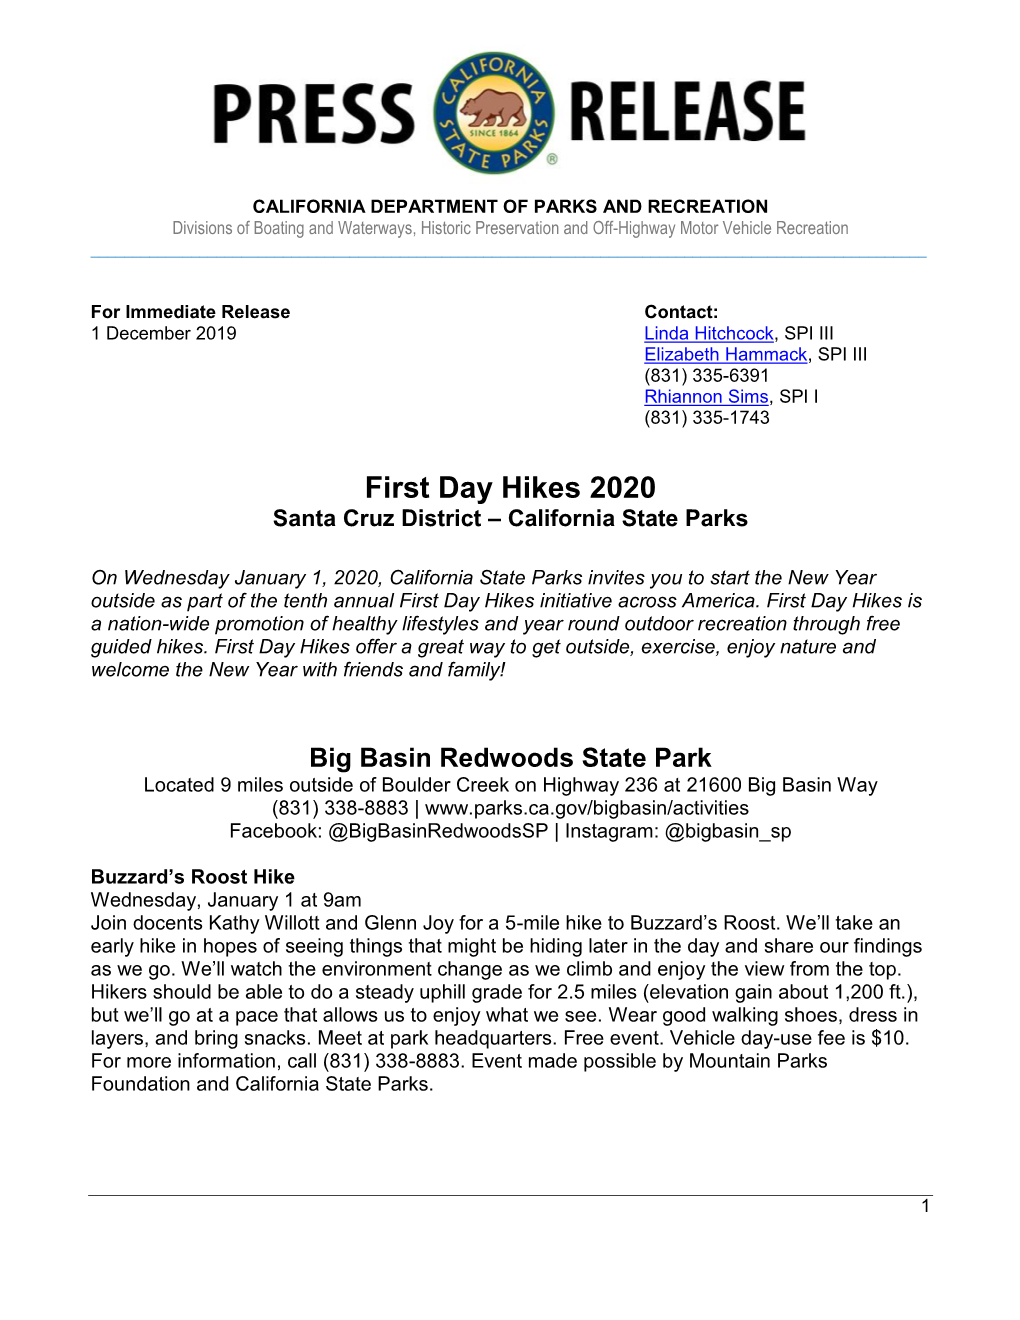 First Day Hikes 2020 Santa Cruz District – California State Parks